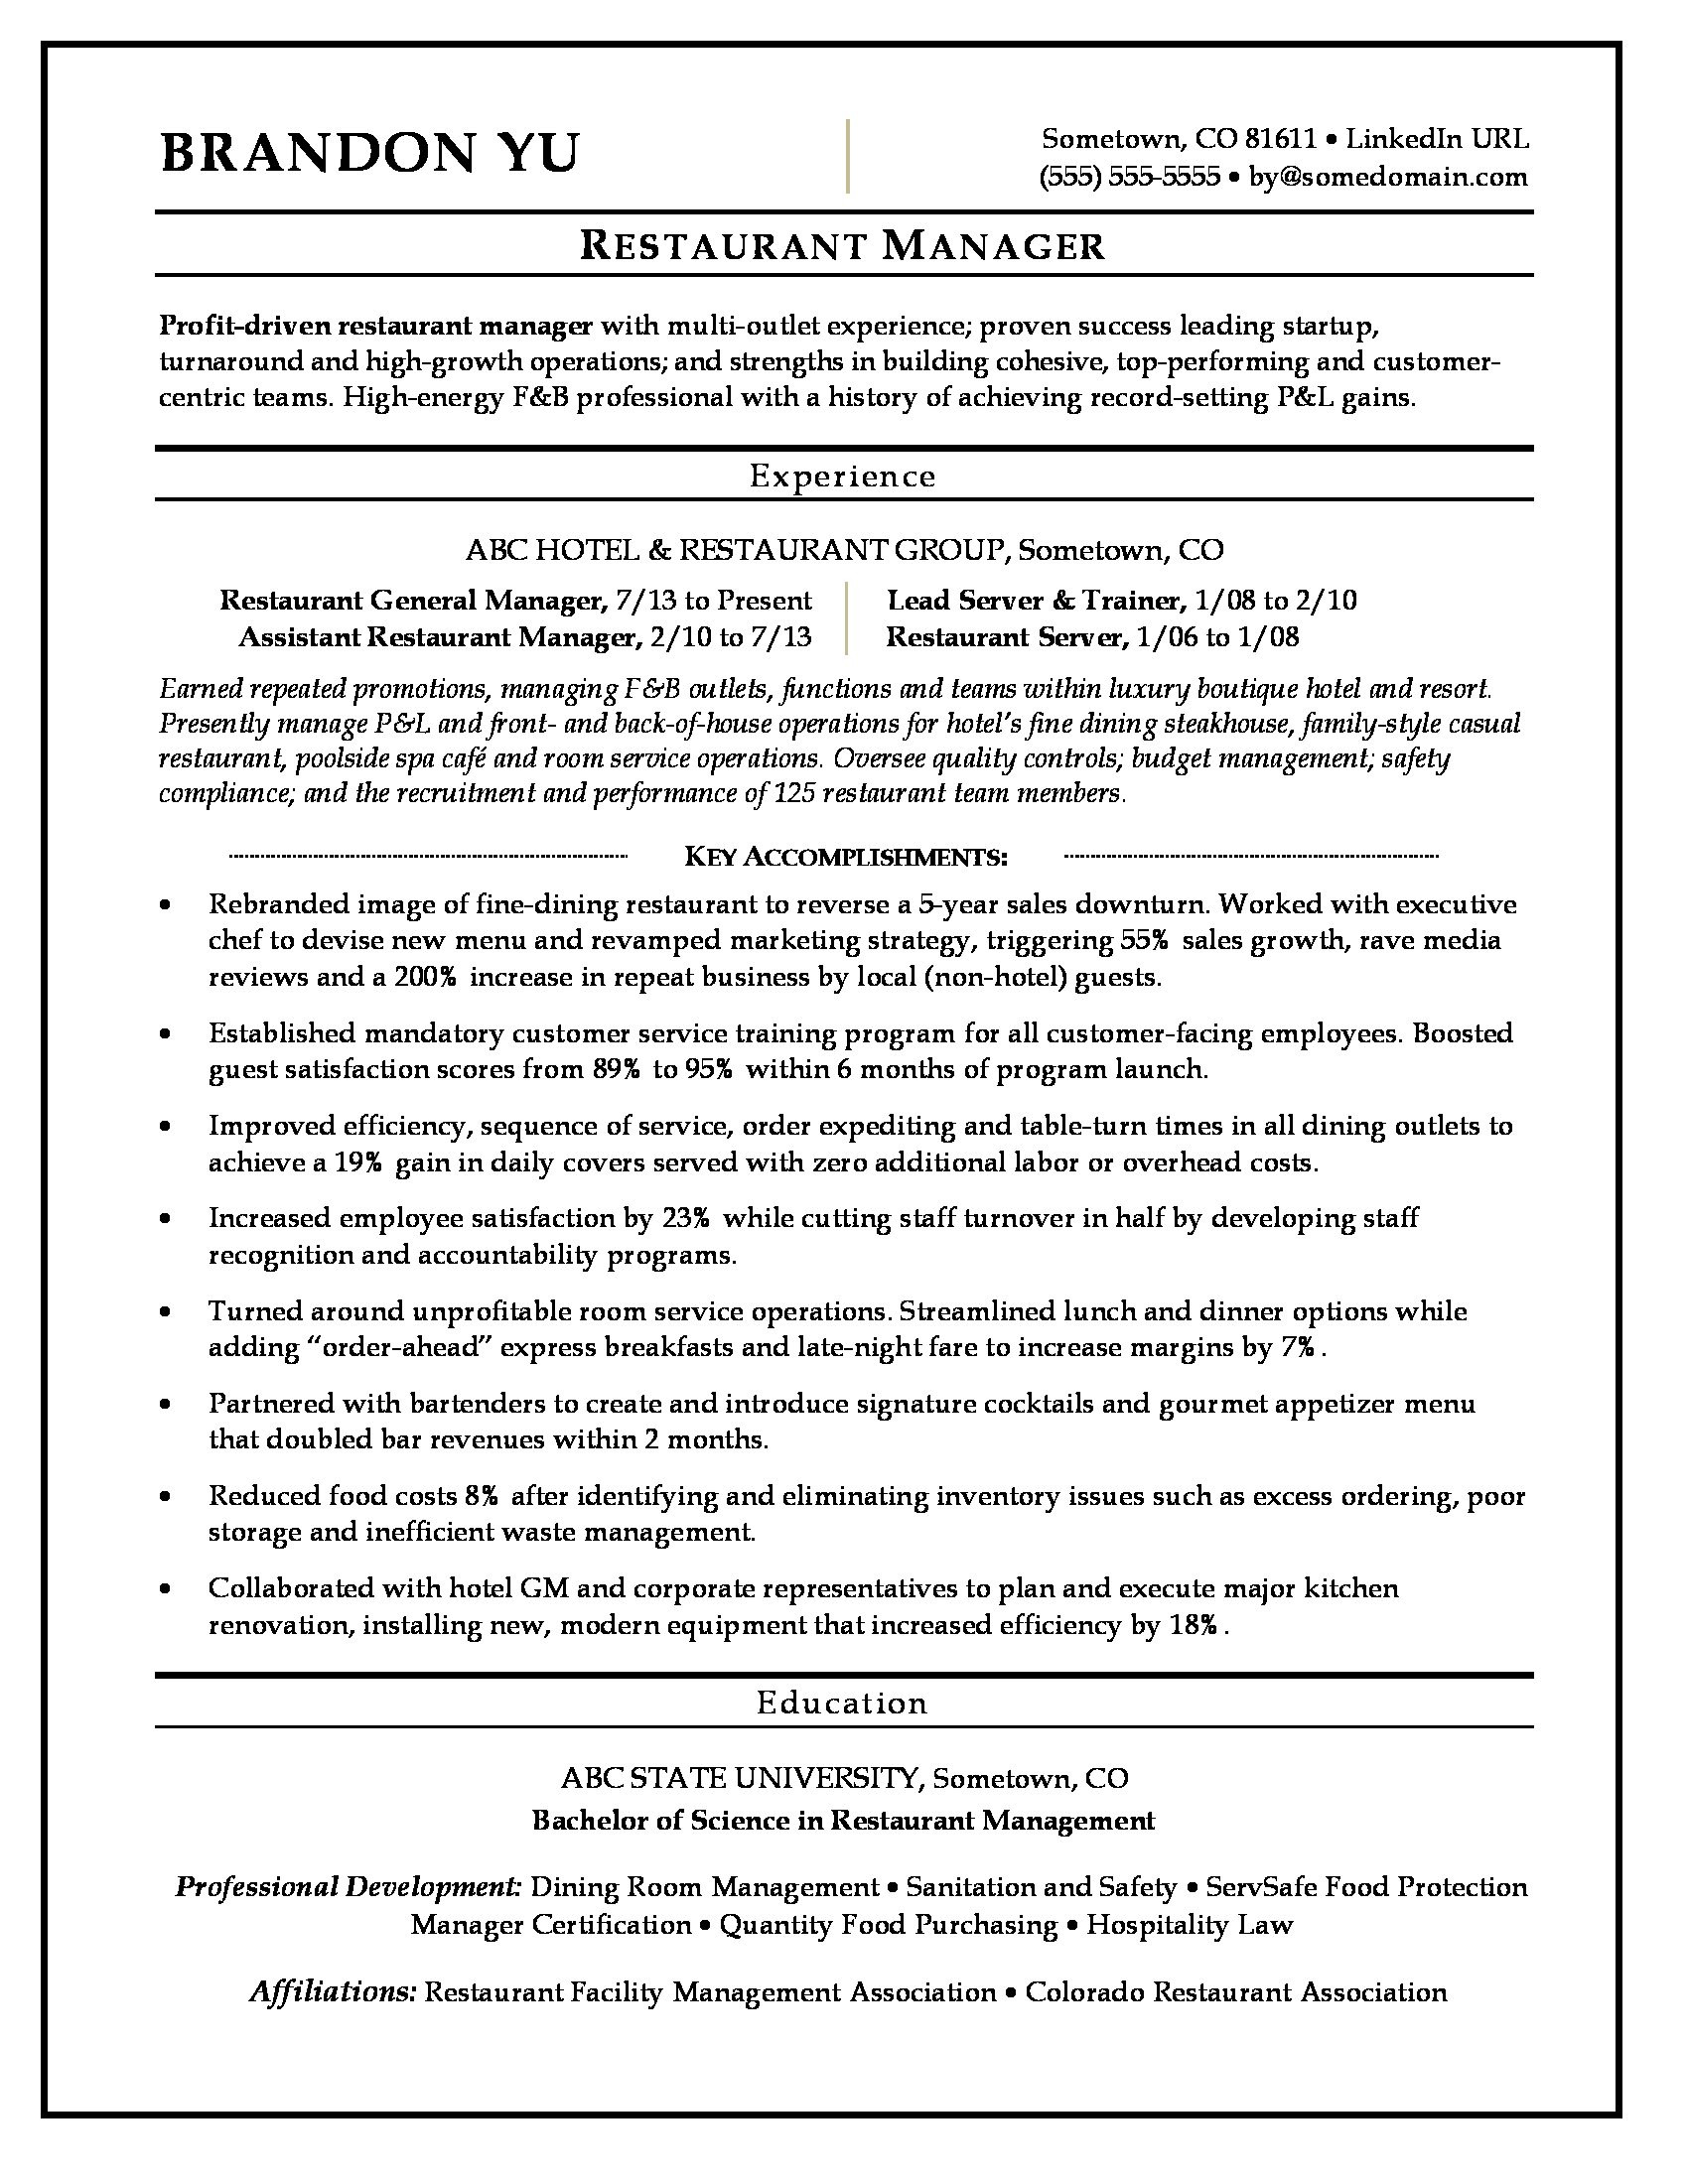 Sample Resume for Restaurant Manager Position Restaurant Manager Resume Sample Monster.com